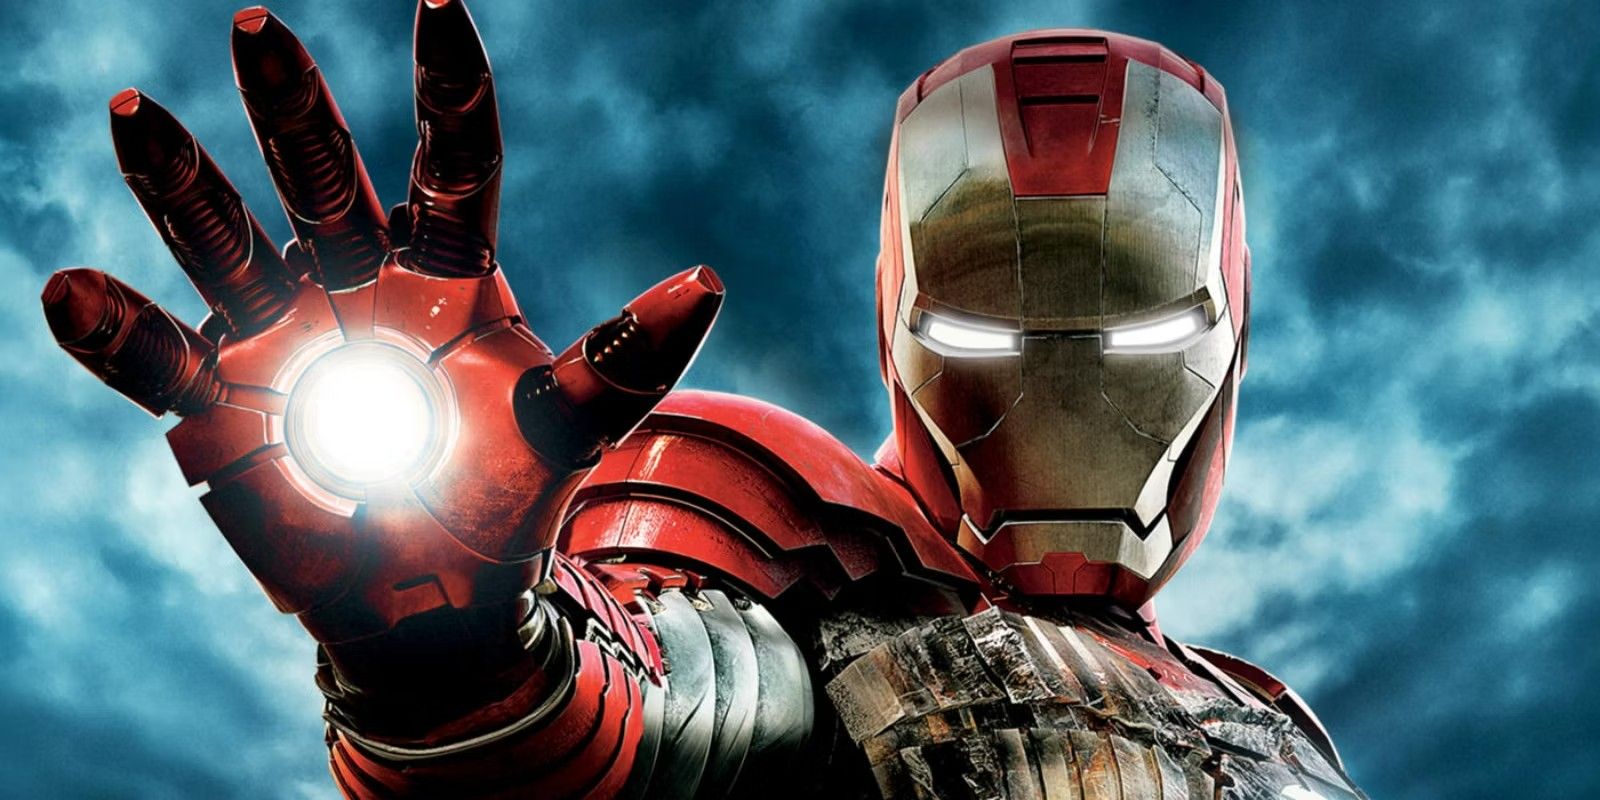 Iron Man (Robert Downey Jr.) about to fire a repulsor beam shot in the MCU